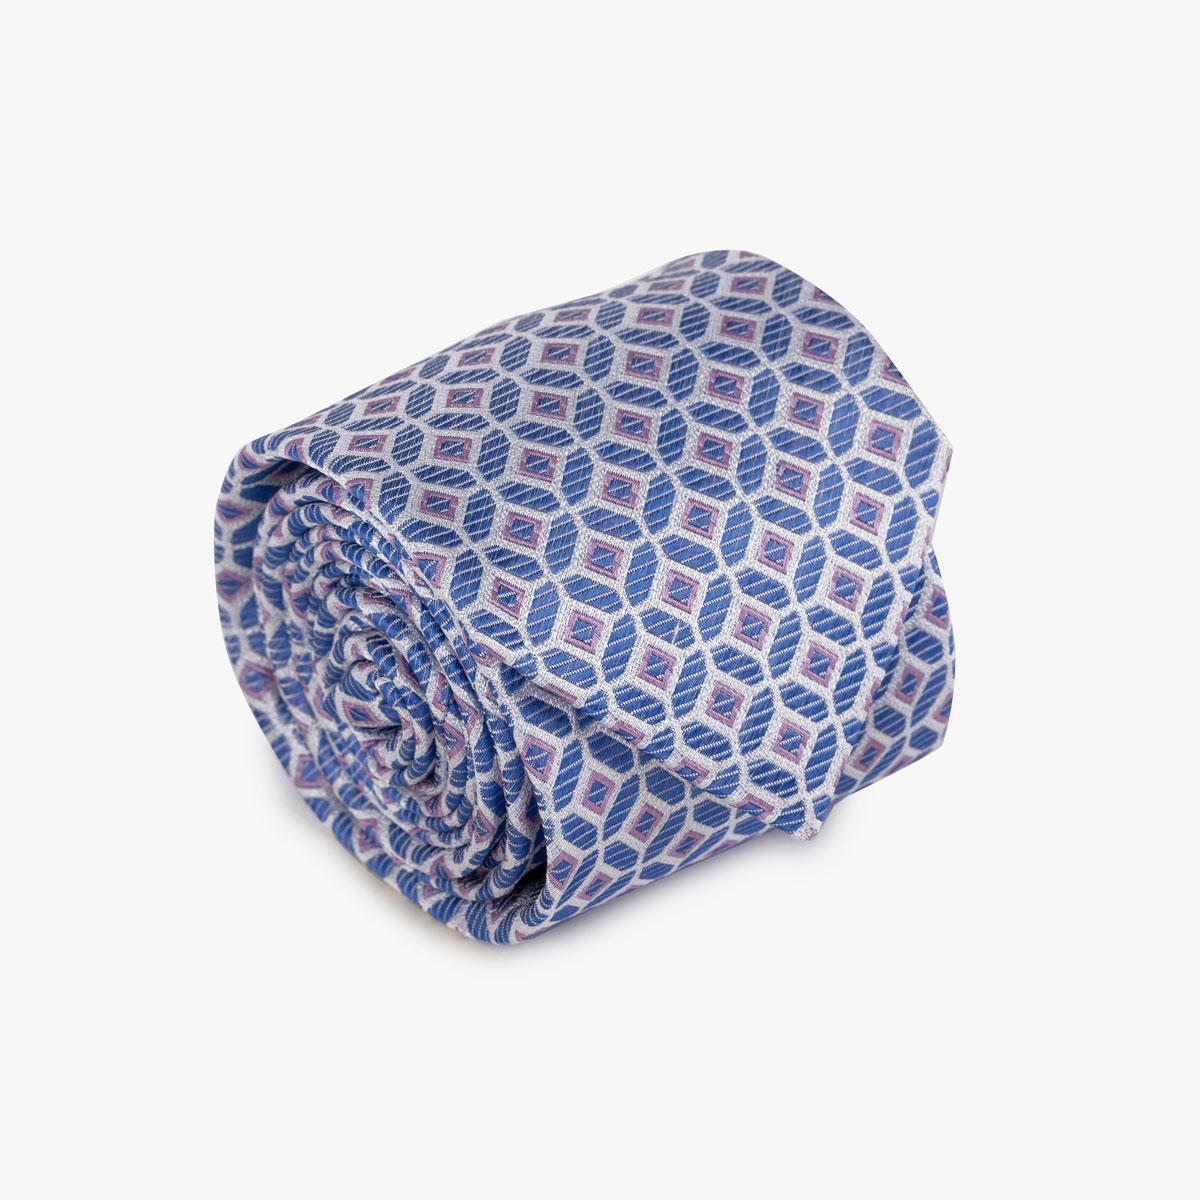 Krawatte mit geometrischem Muster in blau lila